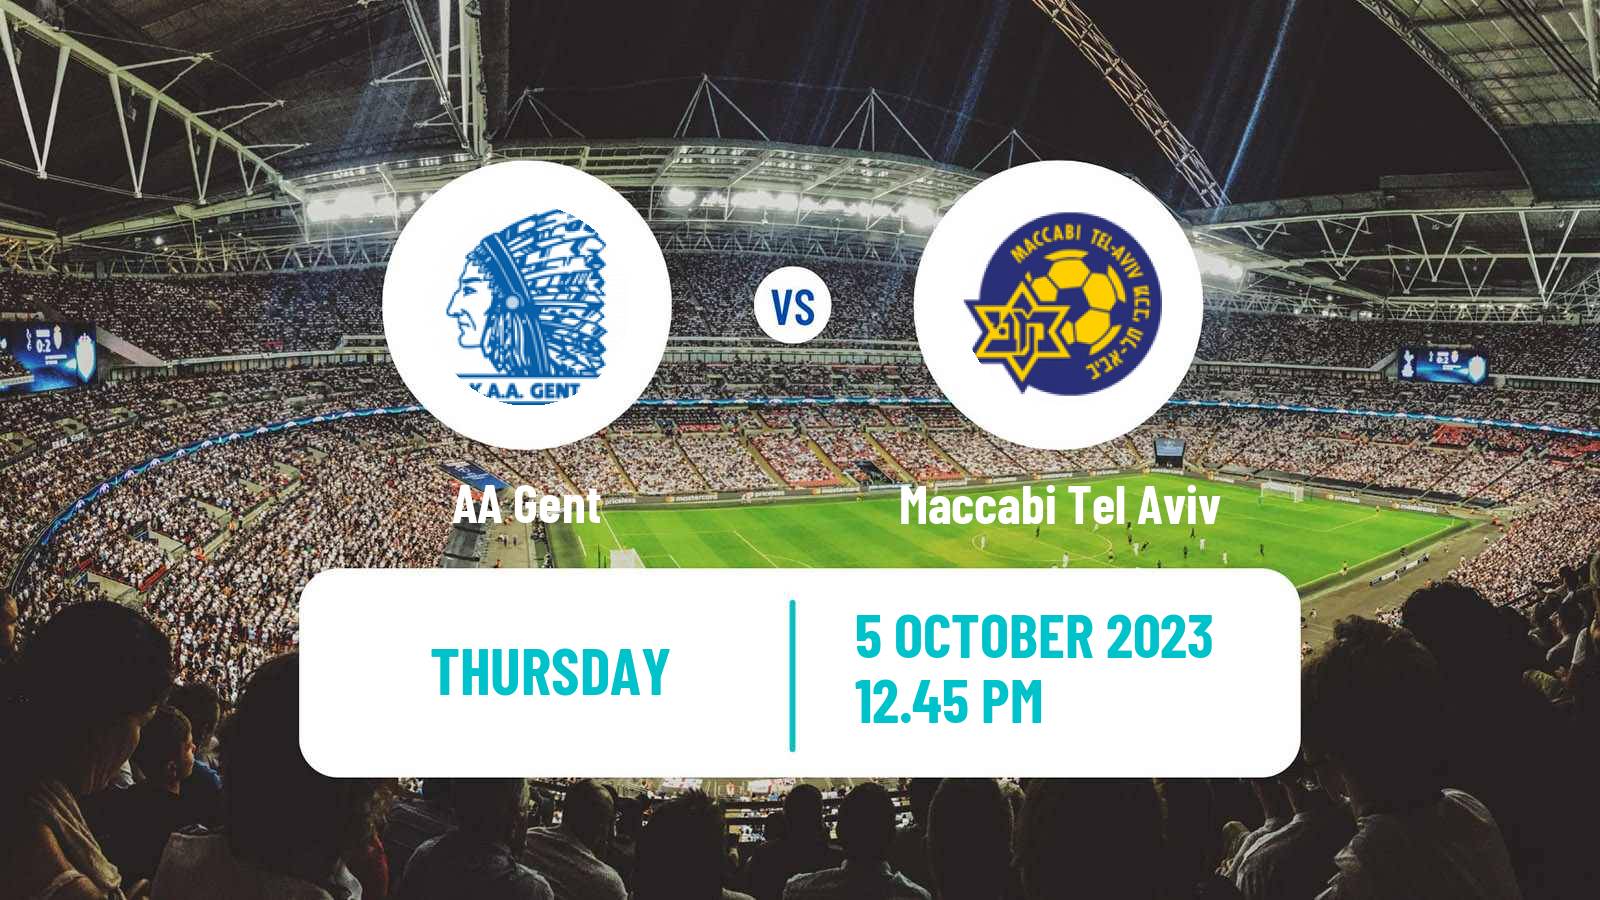 Gent Maccabi Tel Aviv predictions, where to watch, live